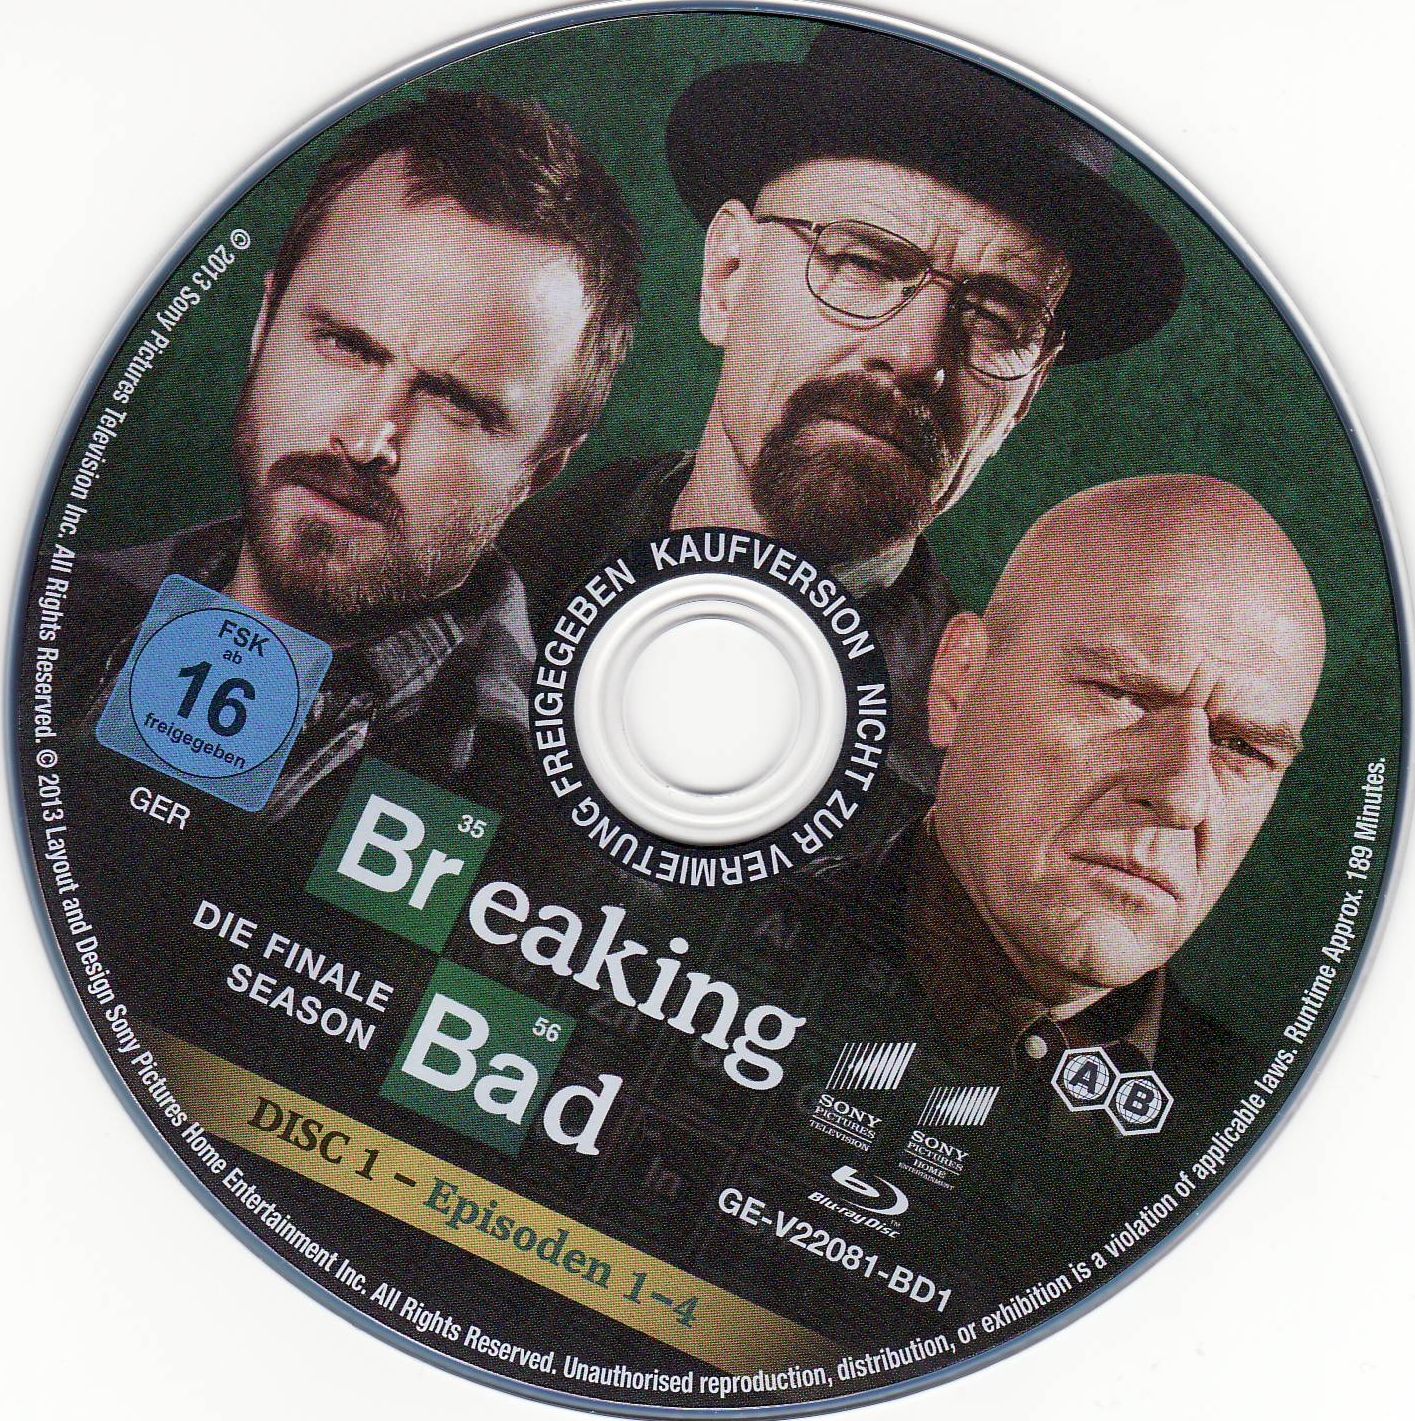 breaking bad season 5 dvd